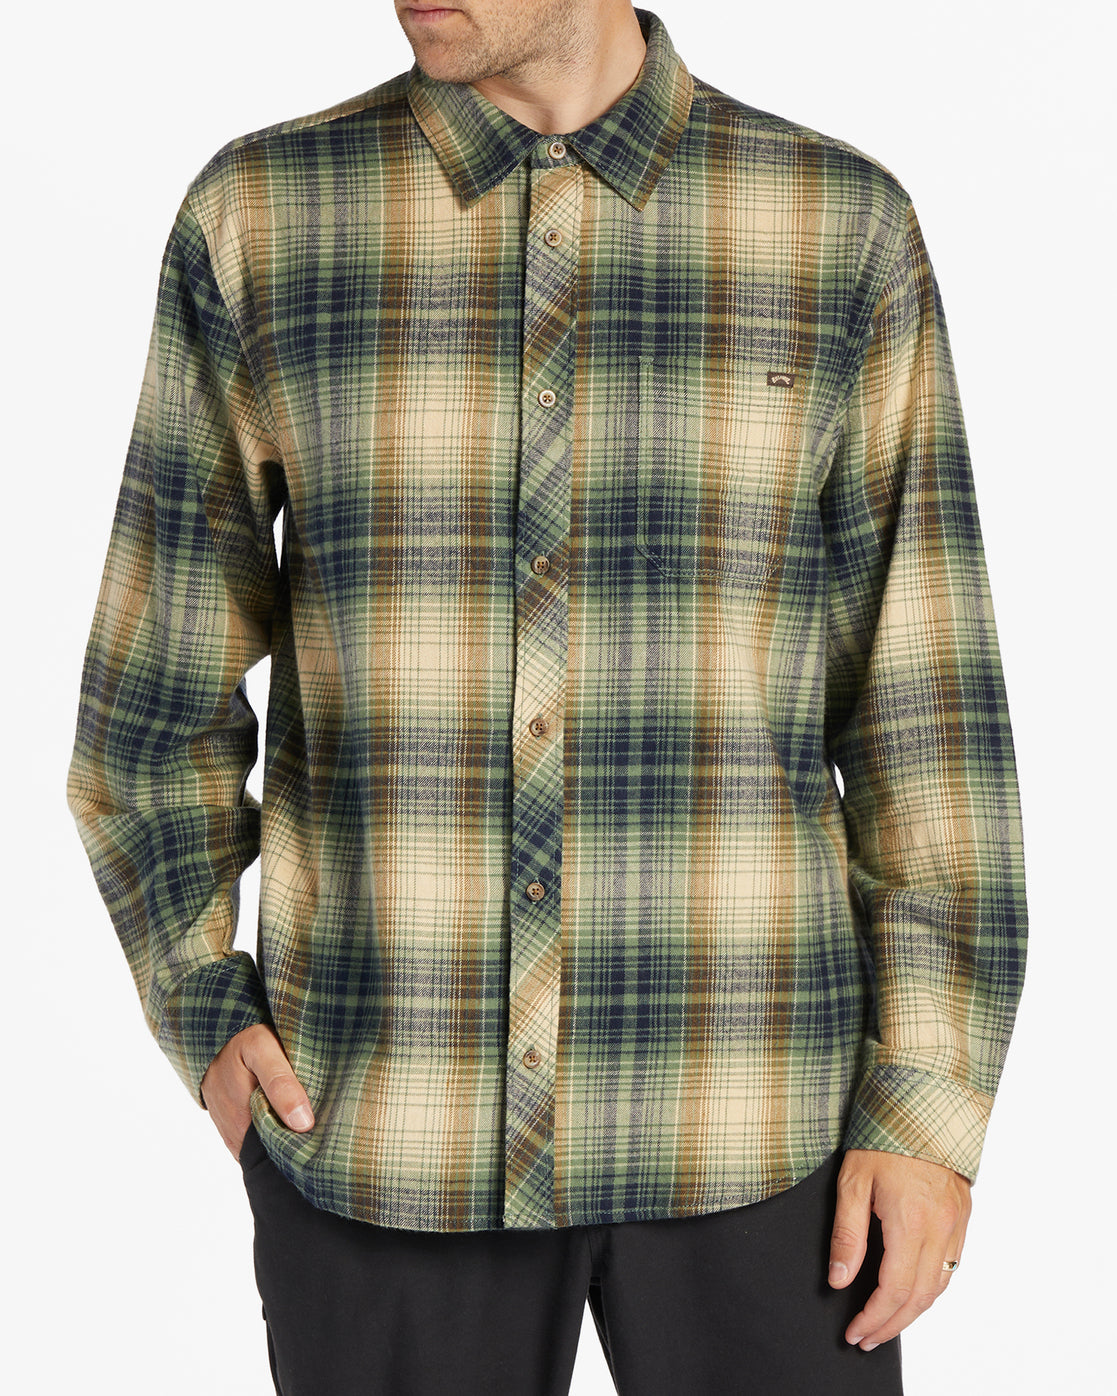 Billabong Coastline Flannel Long Sleeve Shirt - Sage